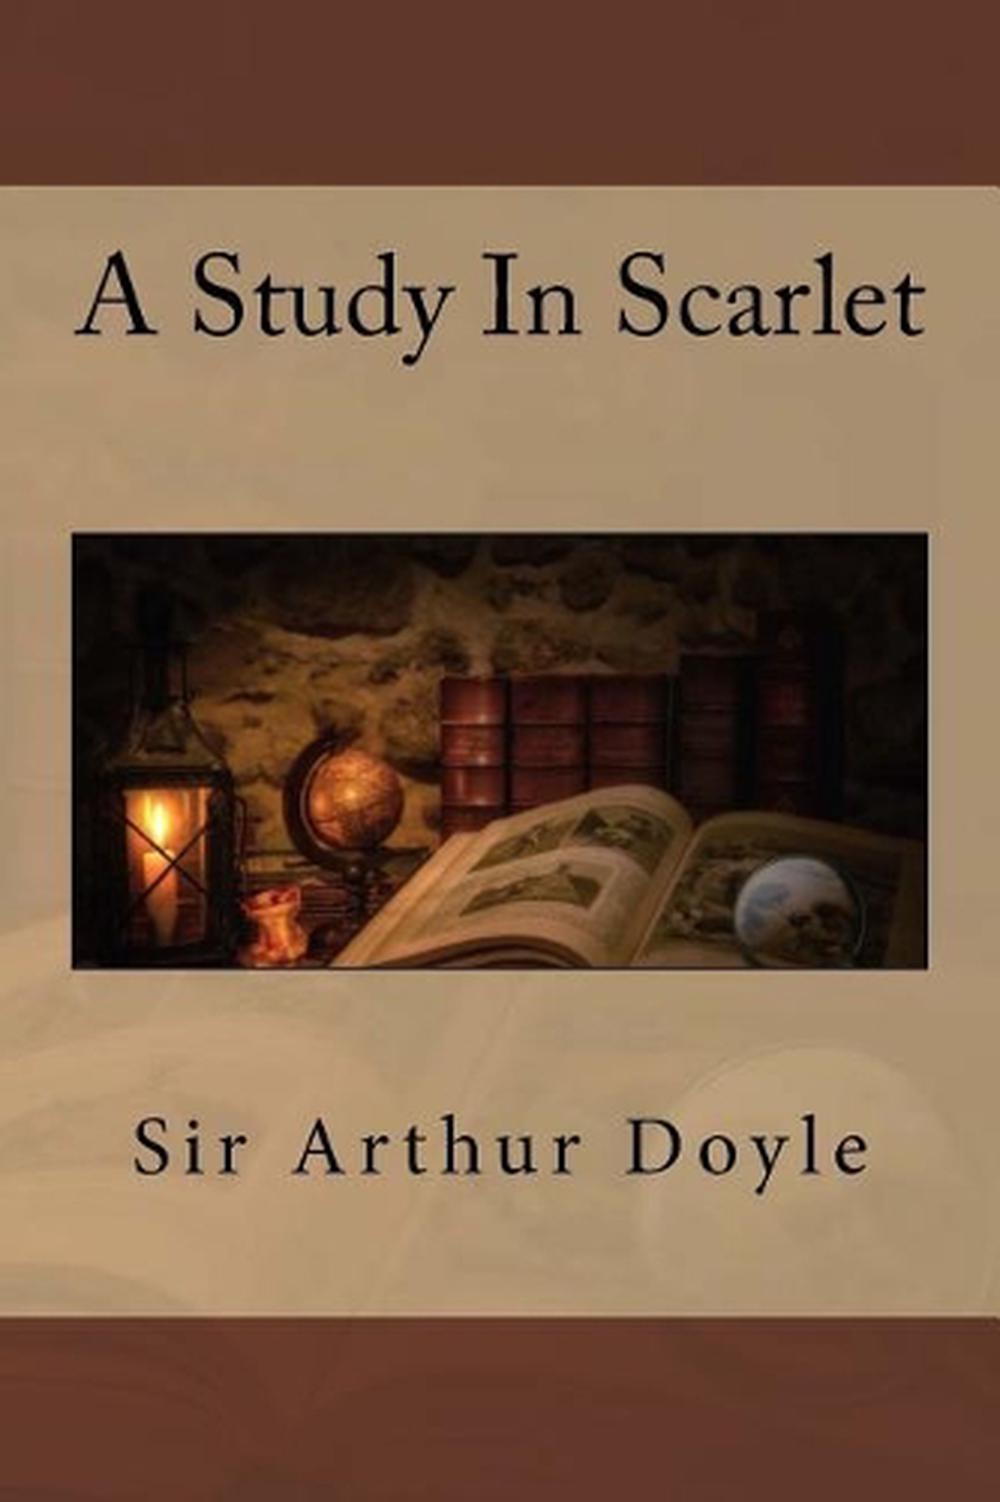 novel a study in scarlet